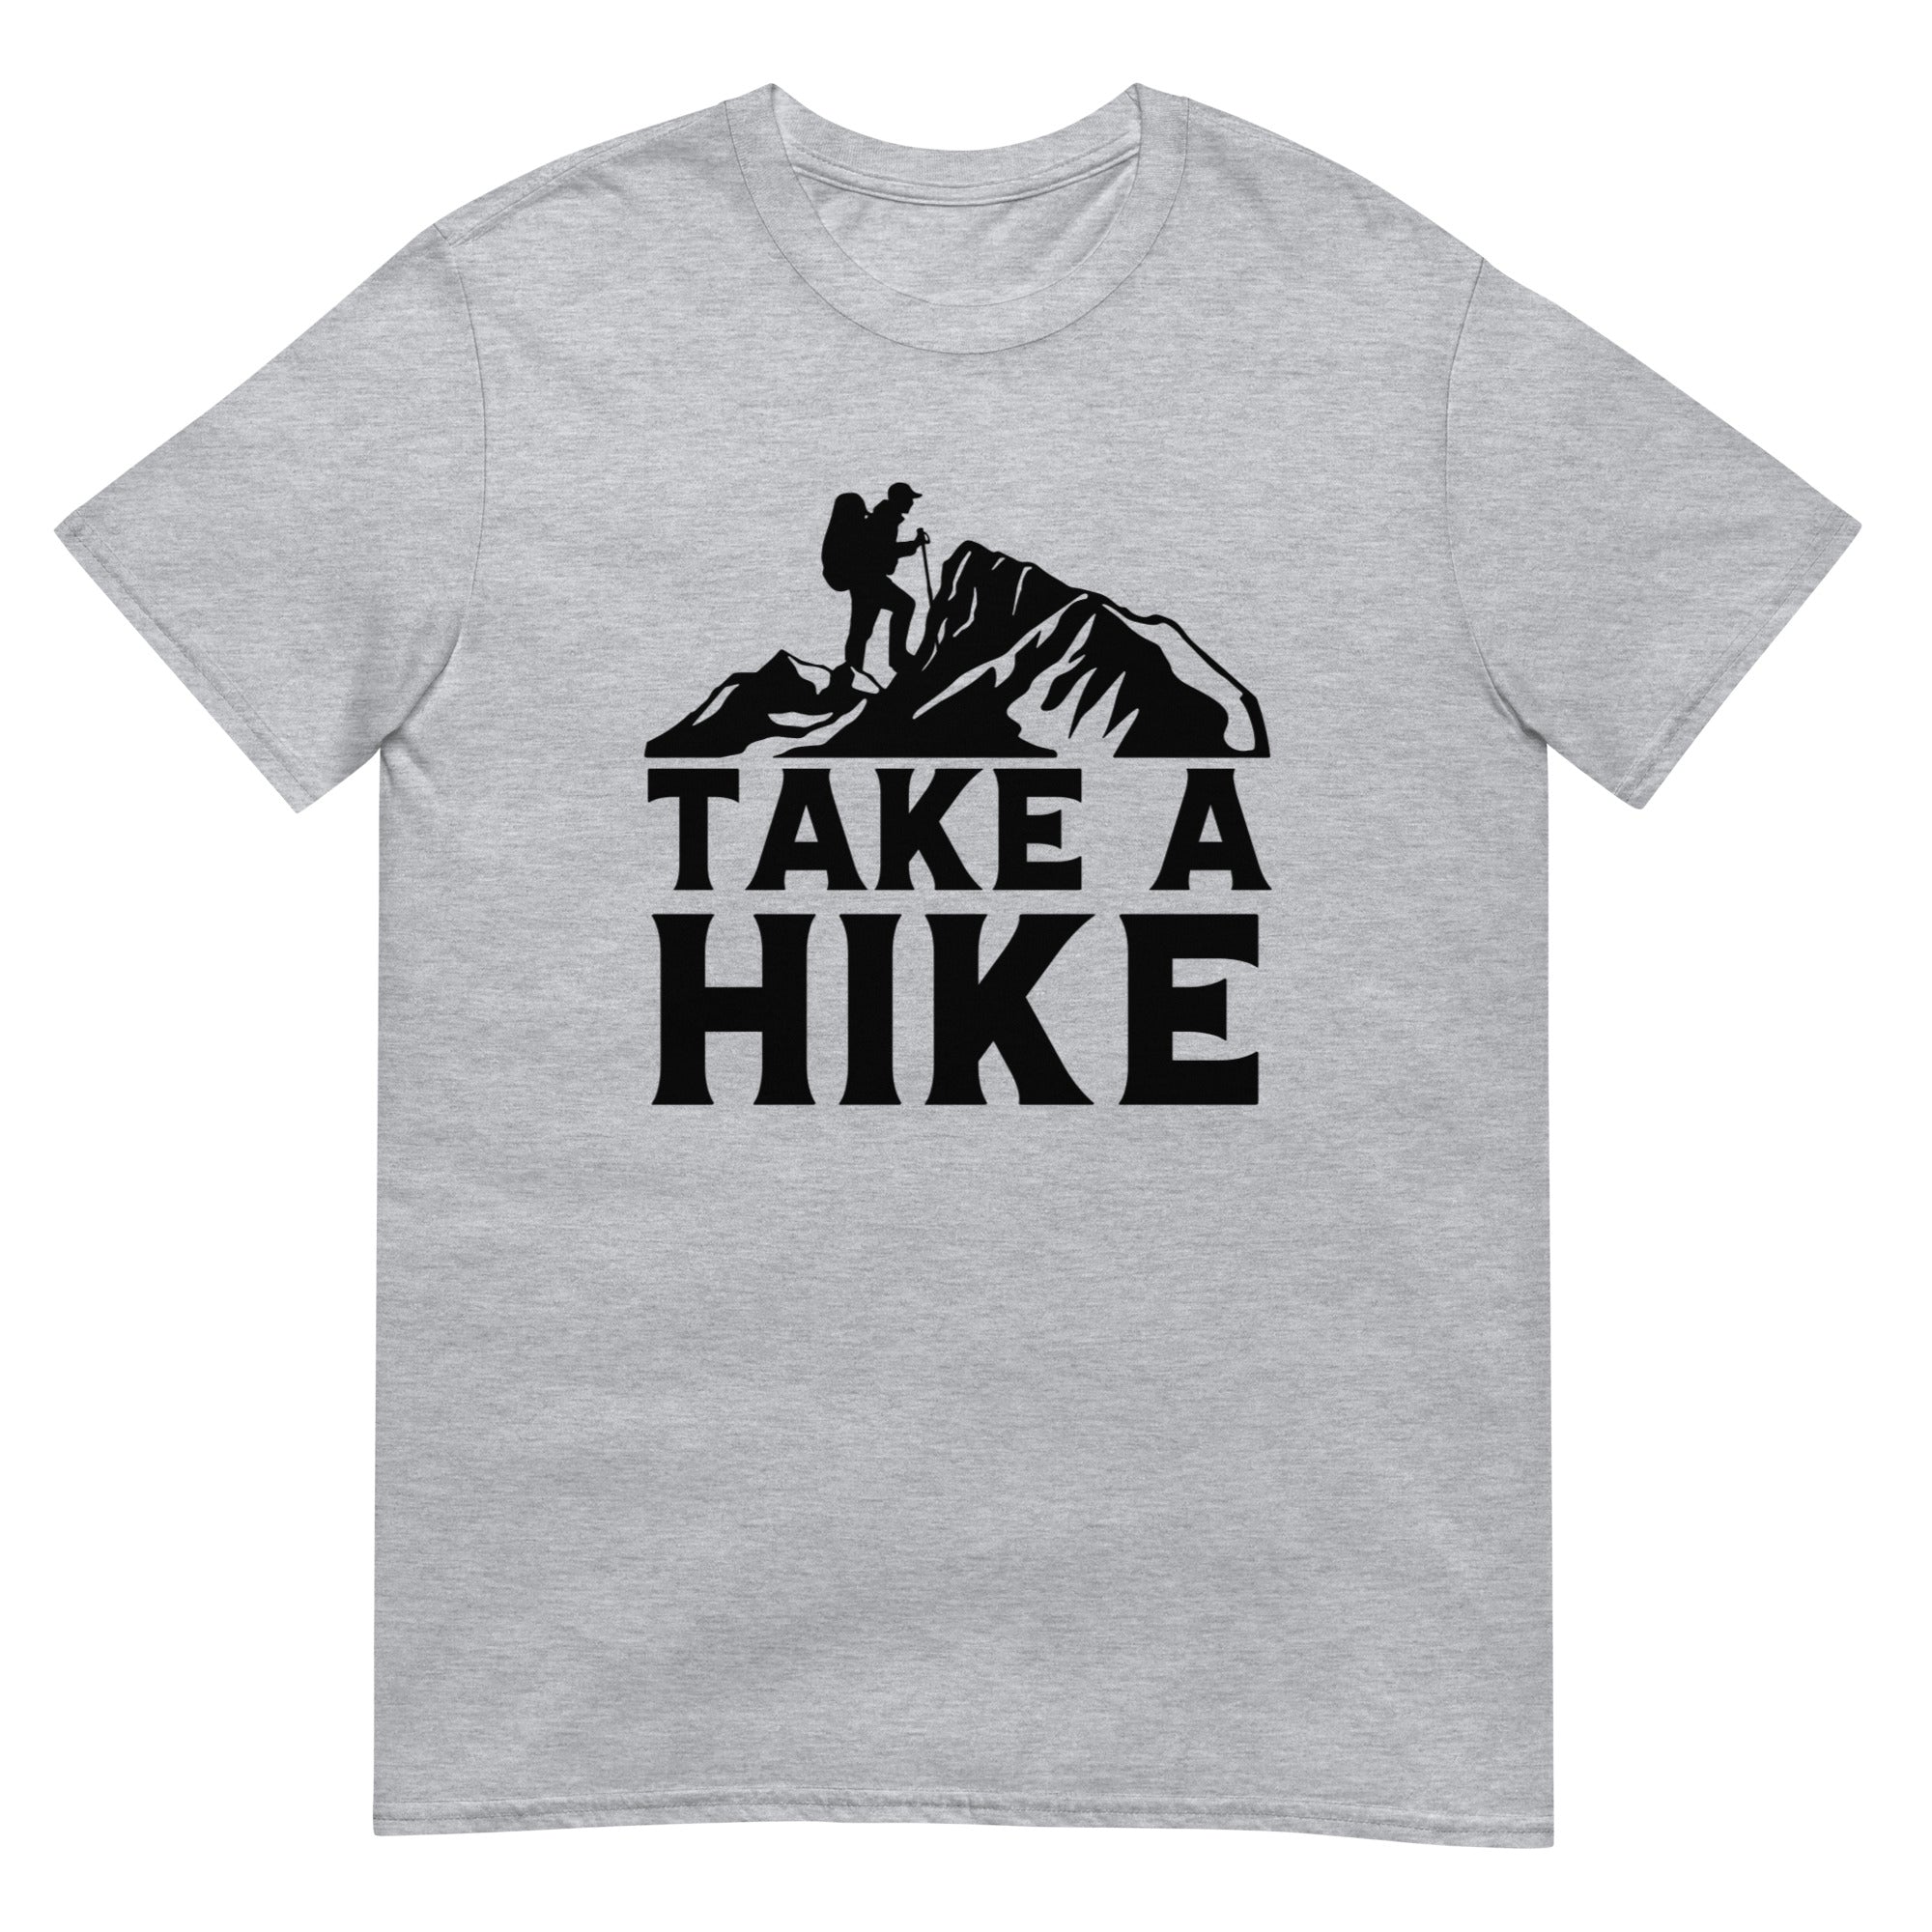 Take A Hike - Short-Sleeve Unisex T-Shirt